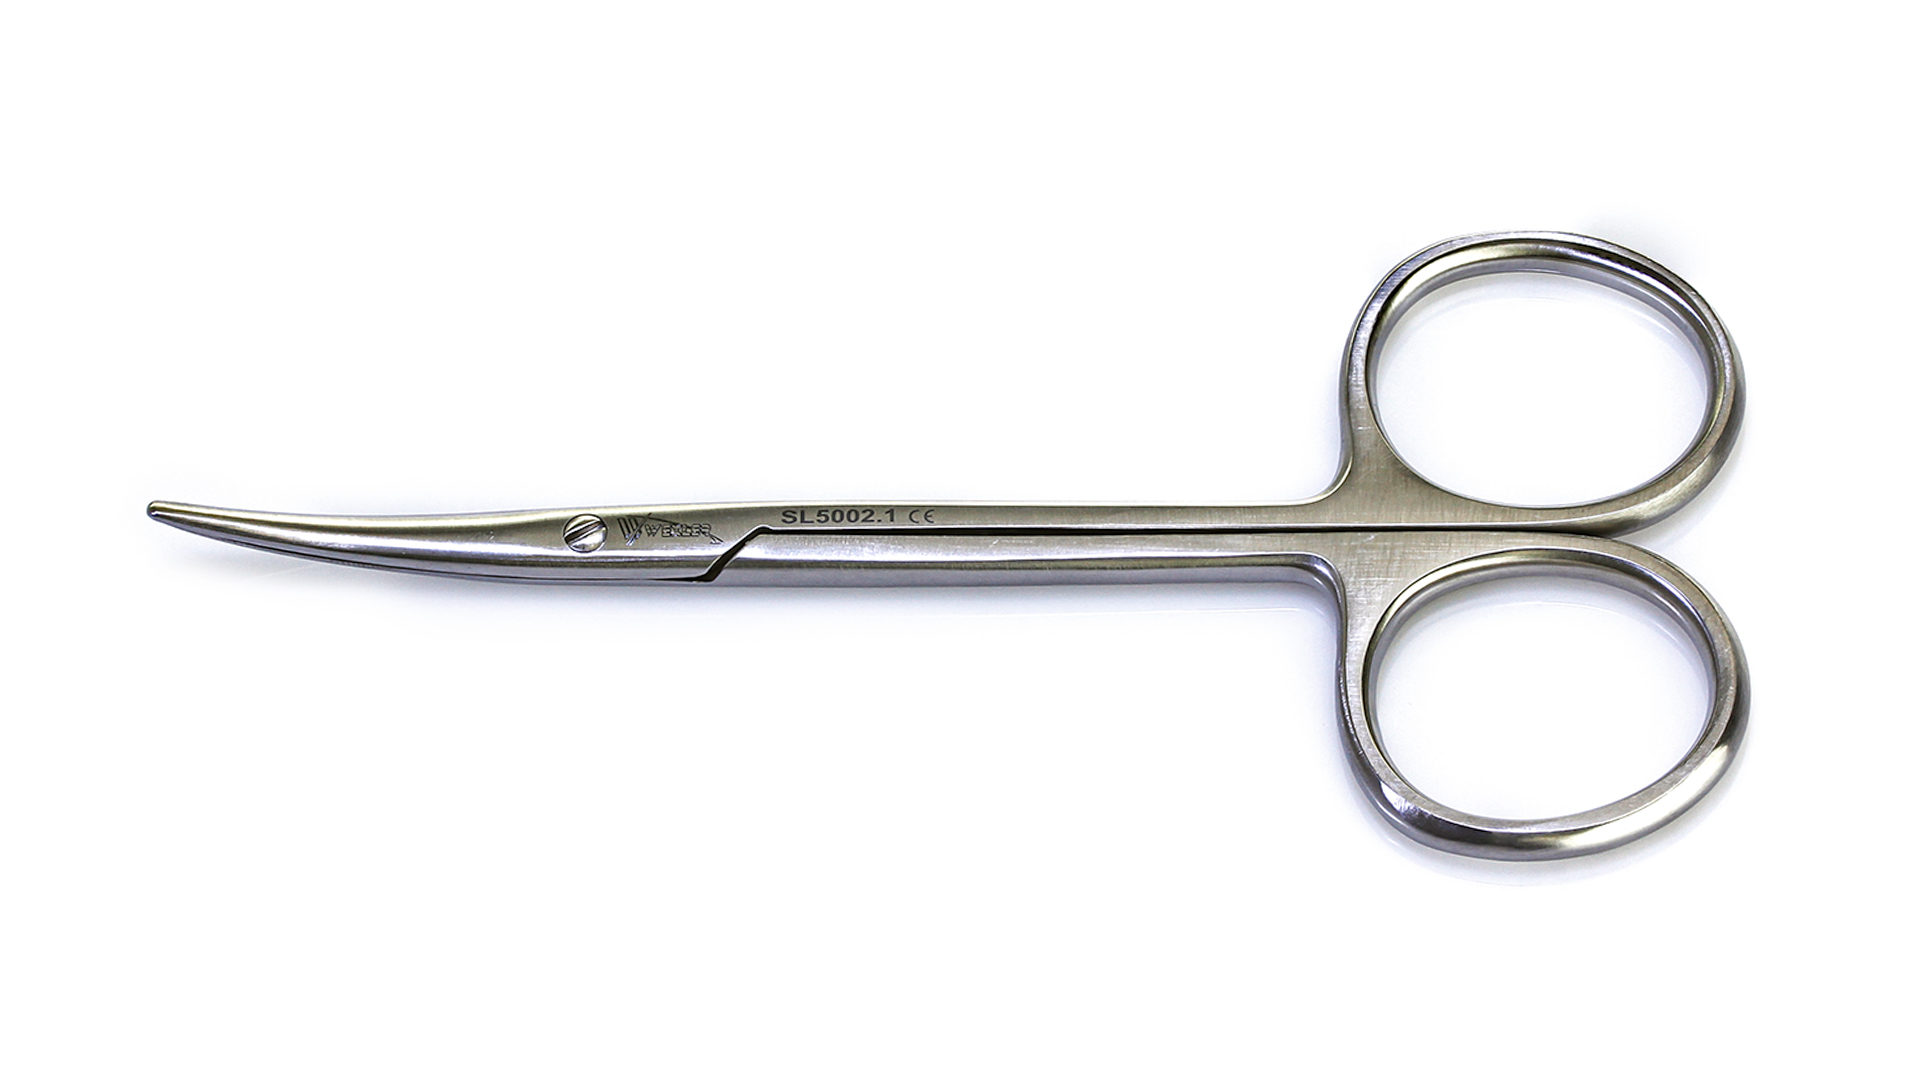 Wexler Surgical - Baby Metzenbaum Scissors - Curved Blade